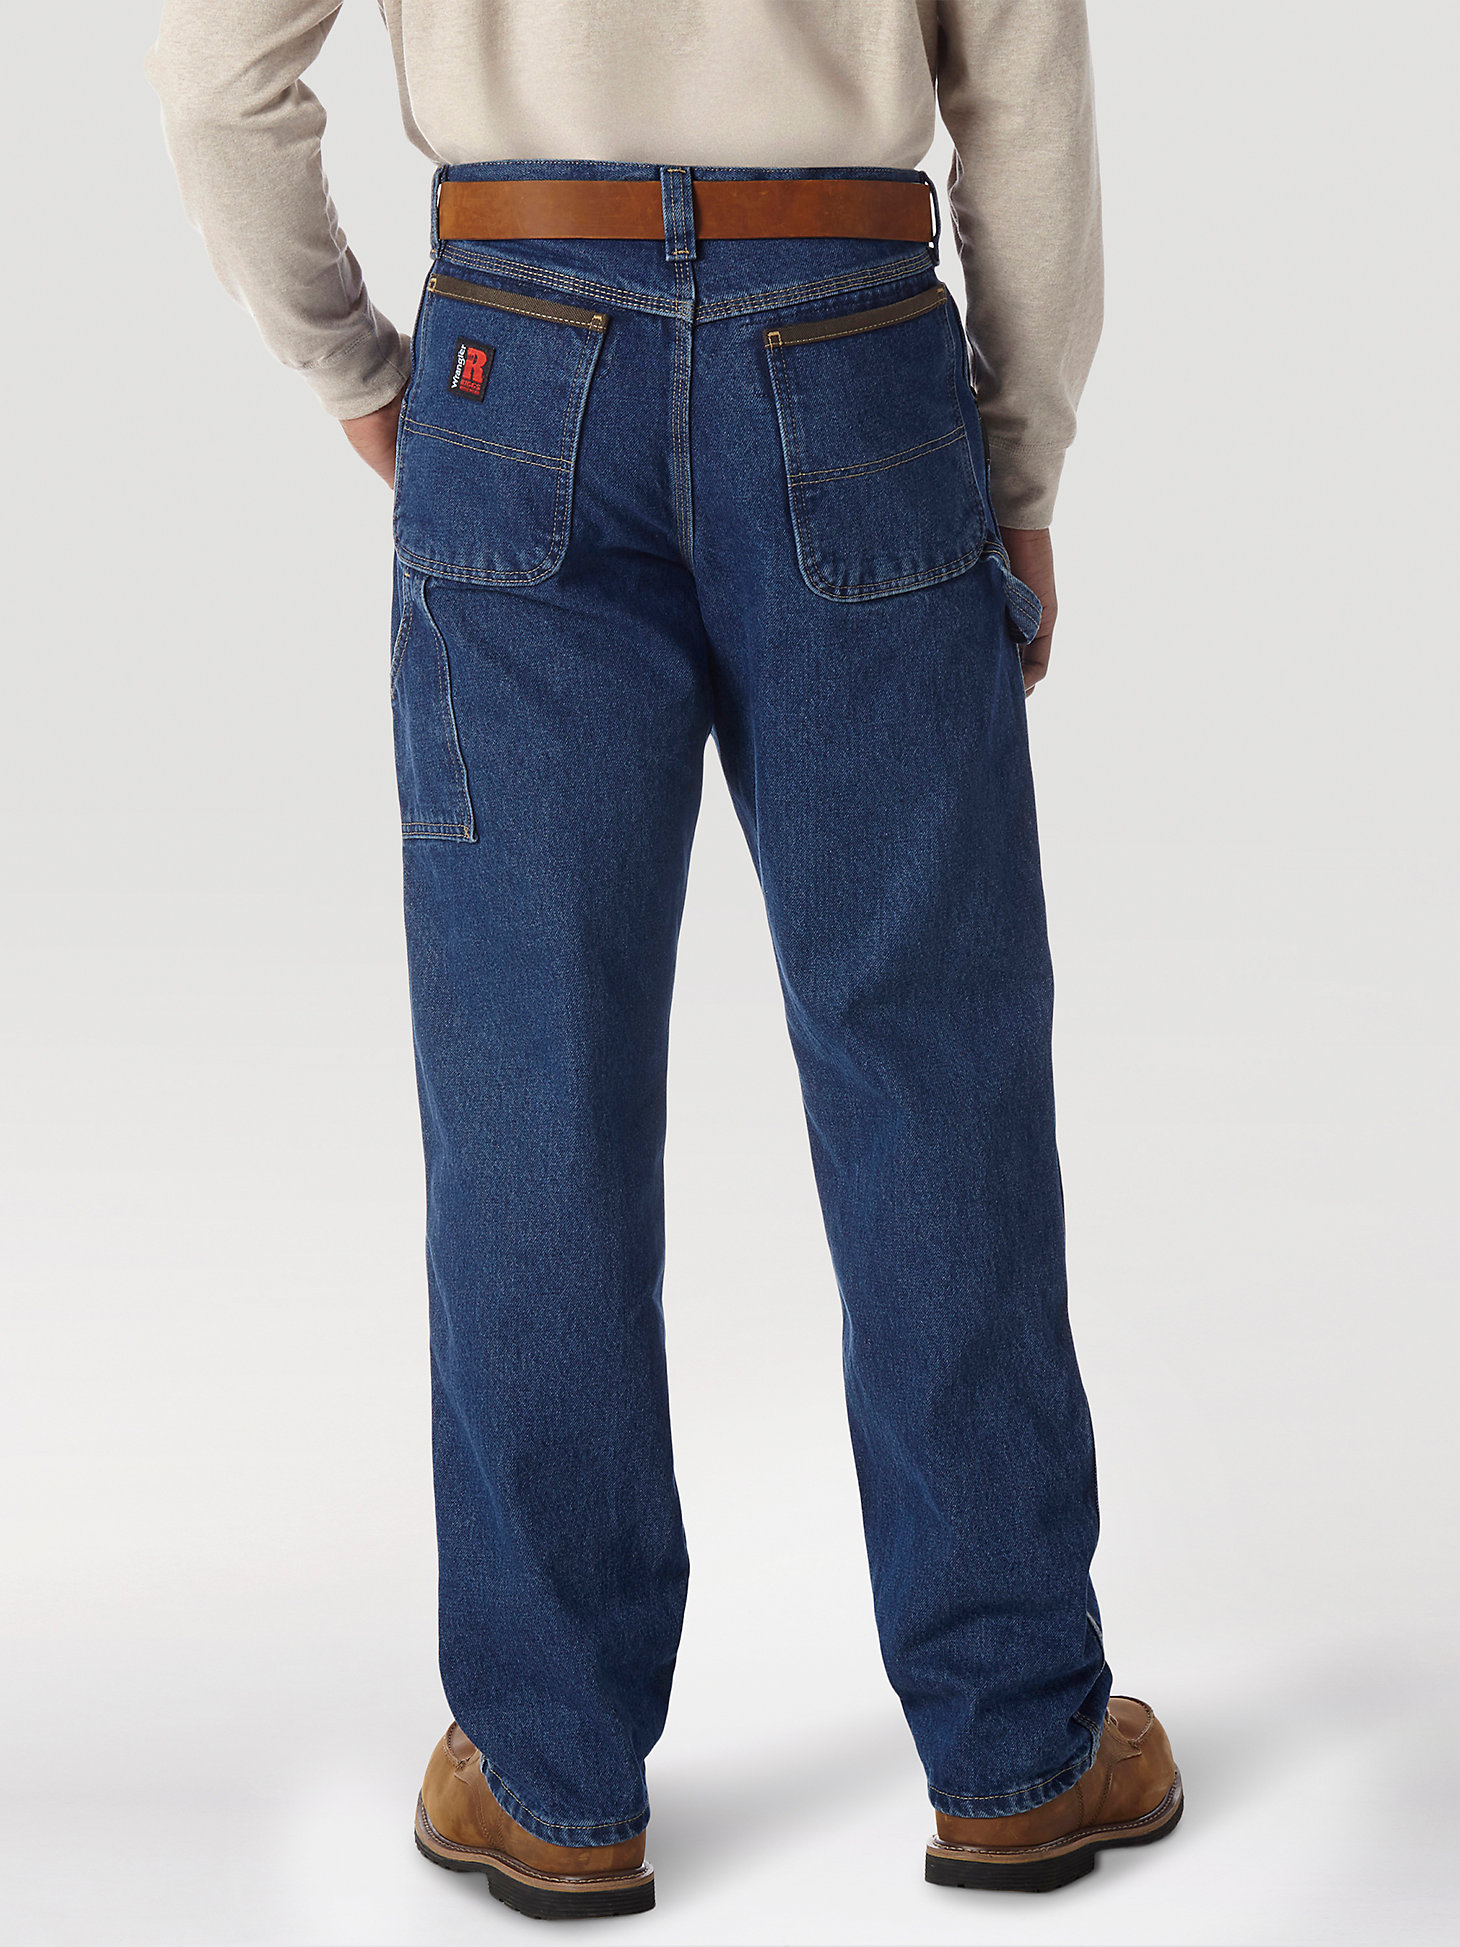 Mens RIGGS Canvas Ripstop Cargo Carpenter Pants Jeans size 36 x 32  Tan